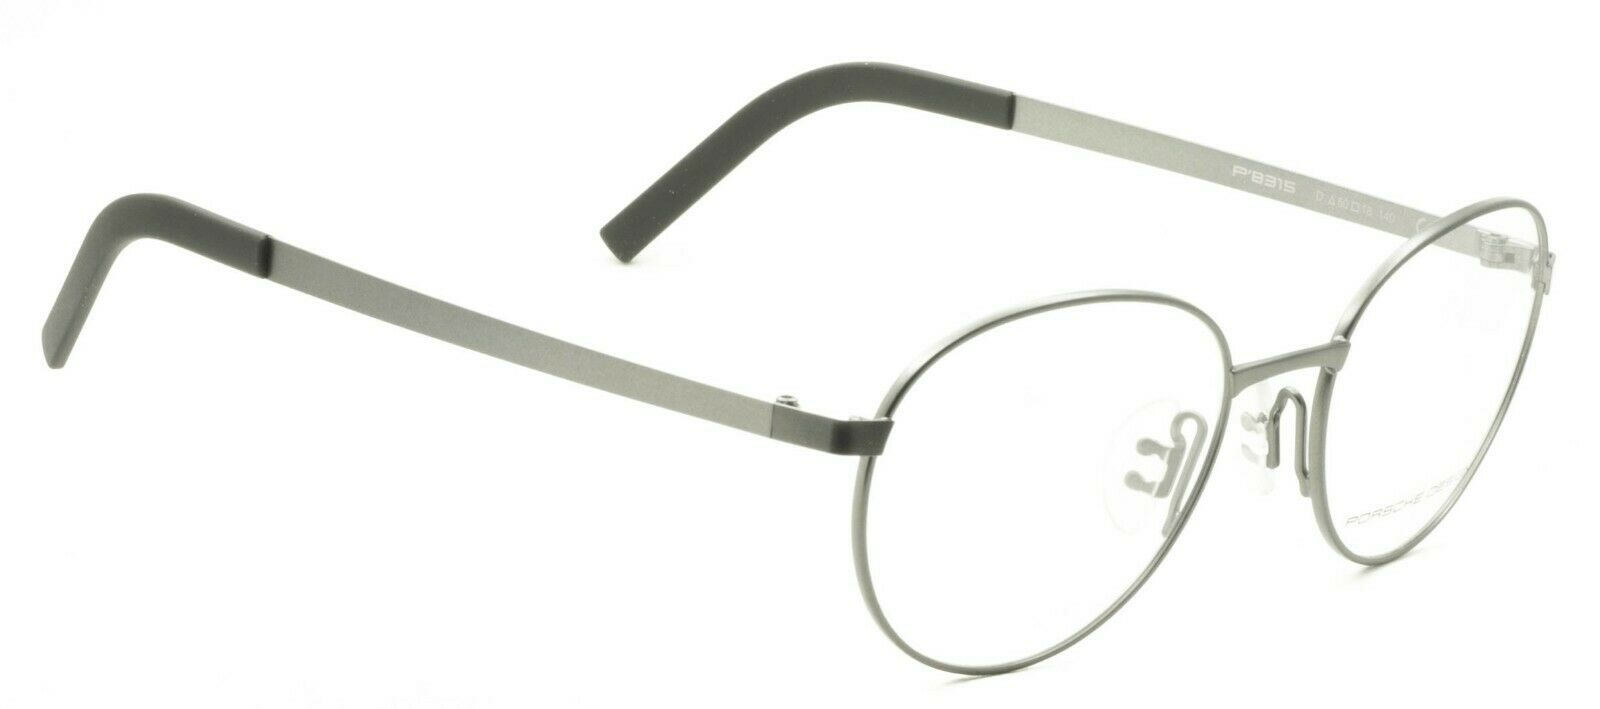 PORSCHE DESIGN P8315 D 50mm Eyewear RX Optical FRAMES Glasses Eyeglasses - Italy